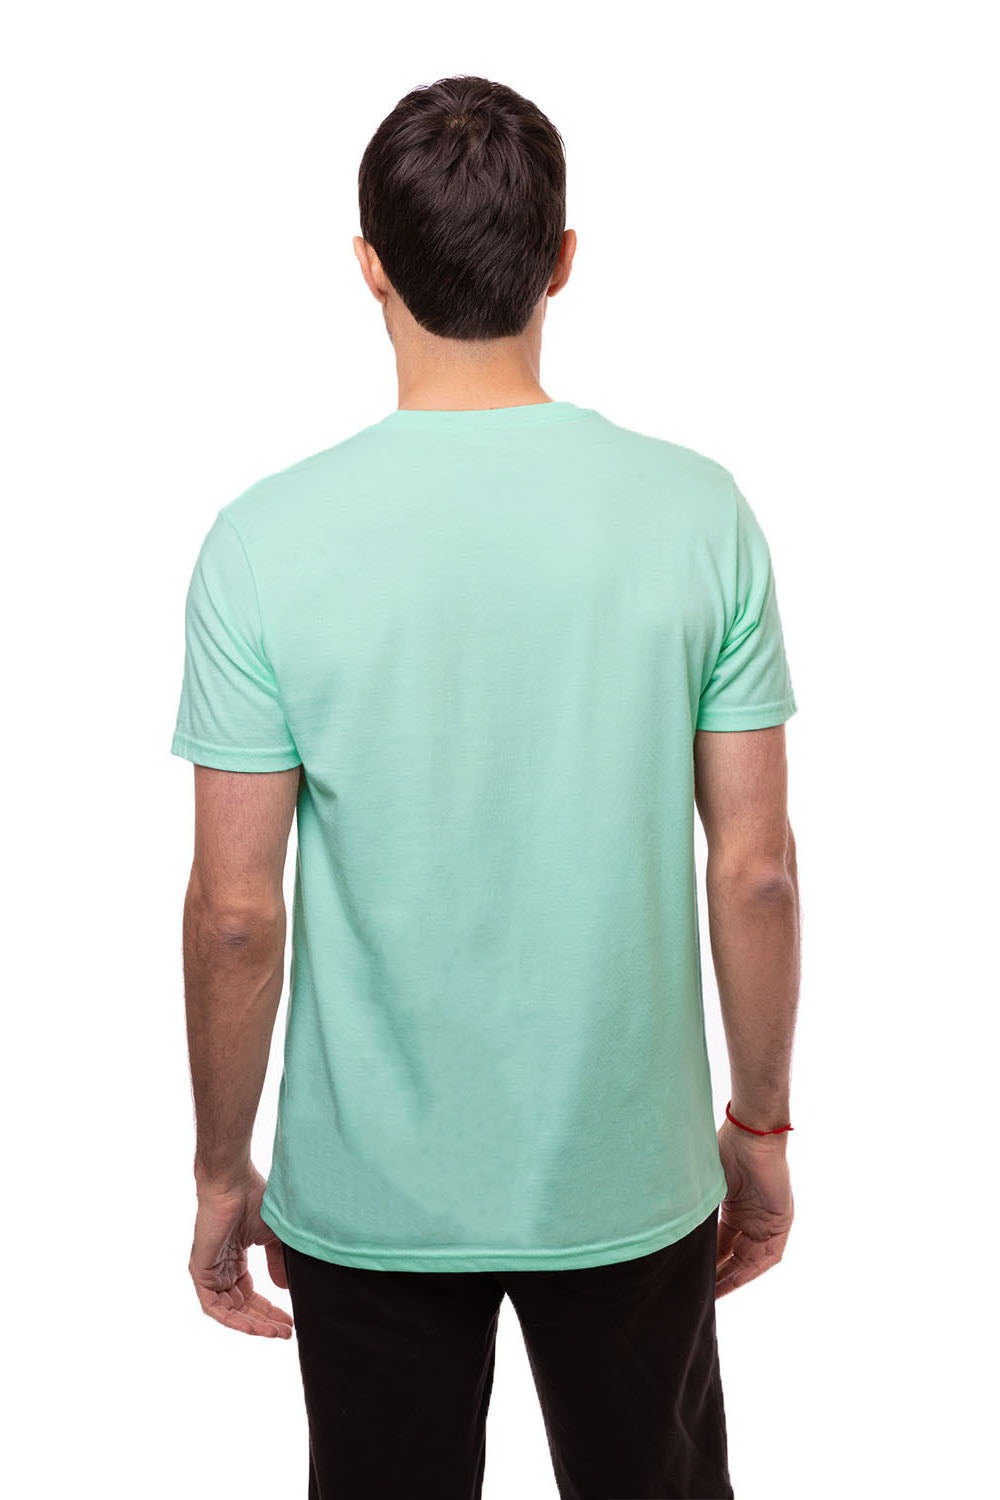 Econscious EC1000 Mens Short Sleeve Crewneck T-Shirt Sunwashed Mint Green Back